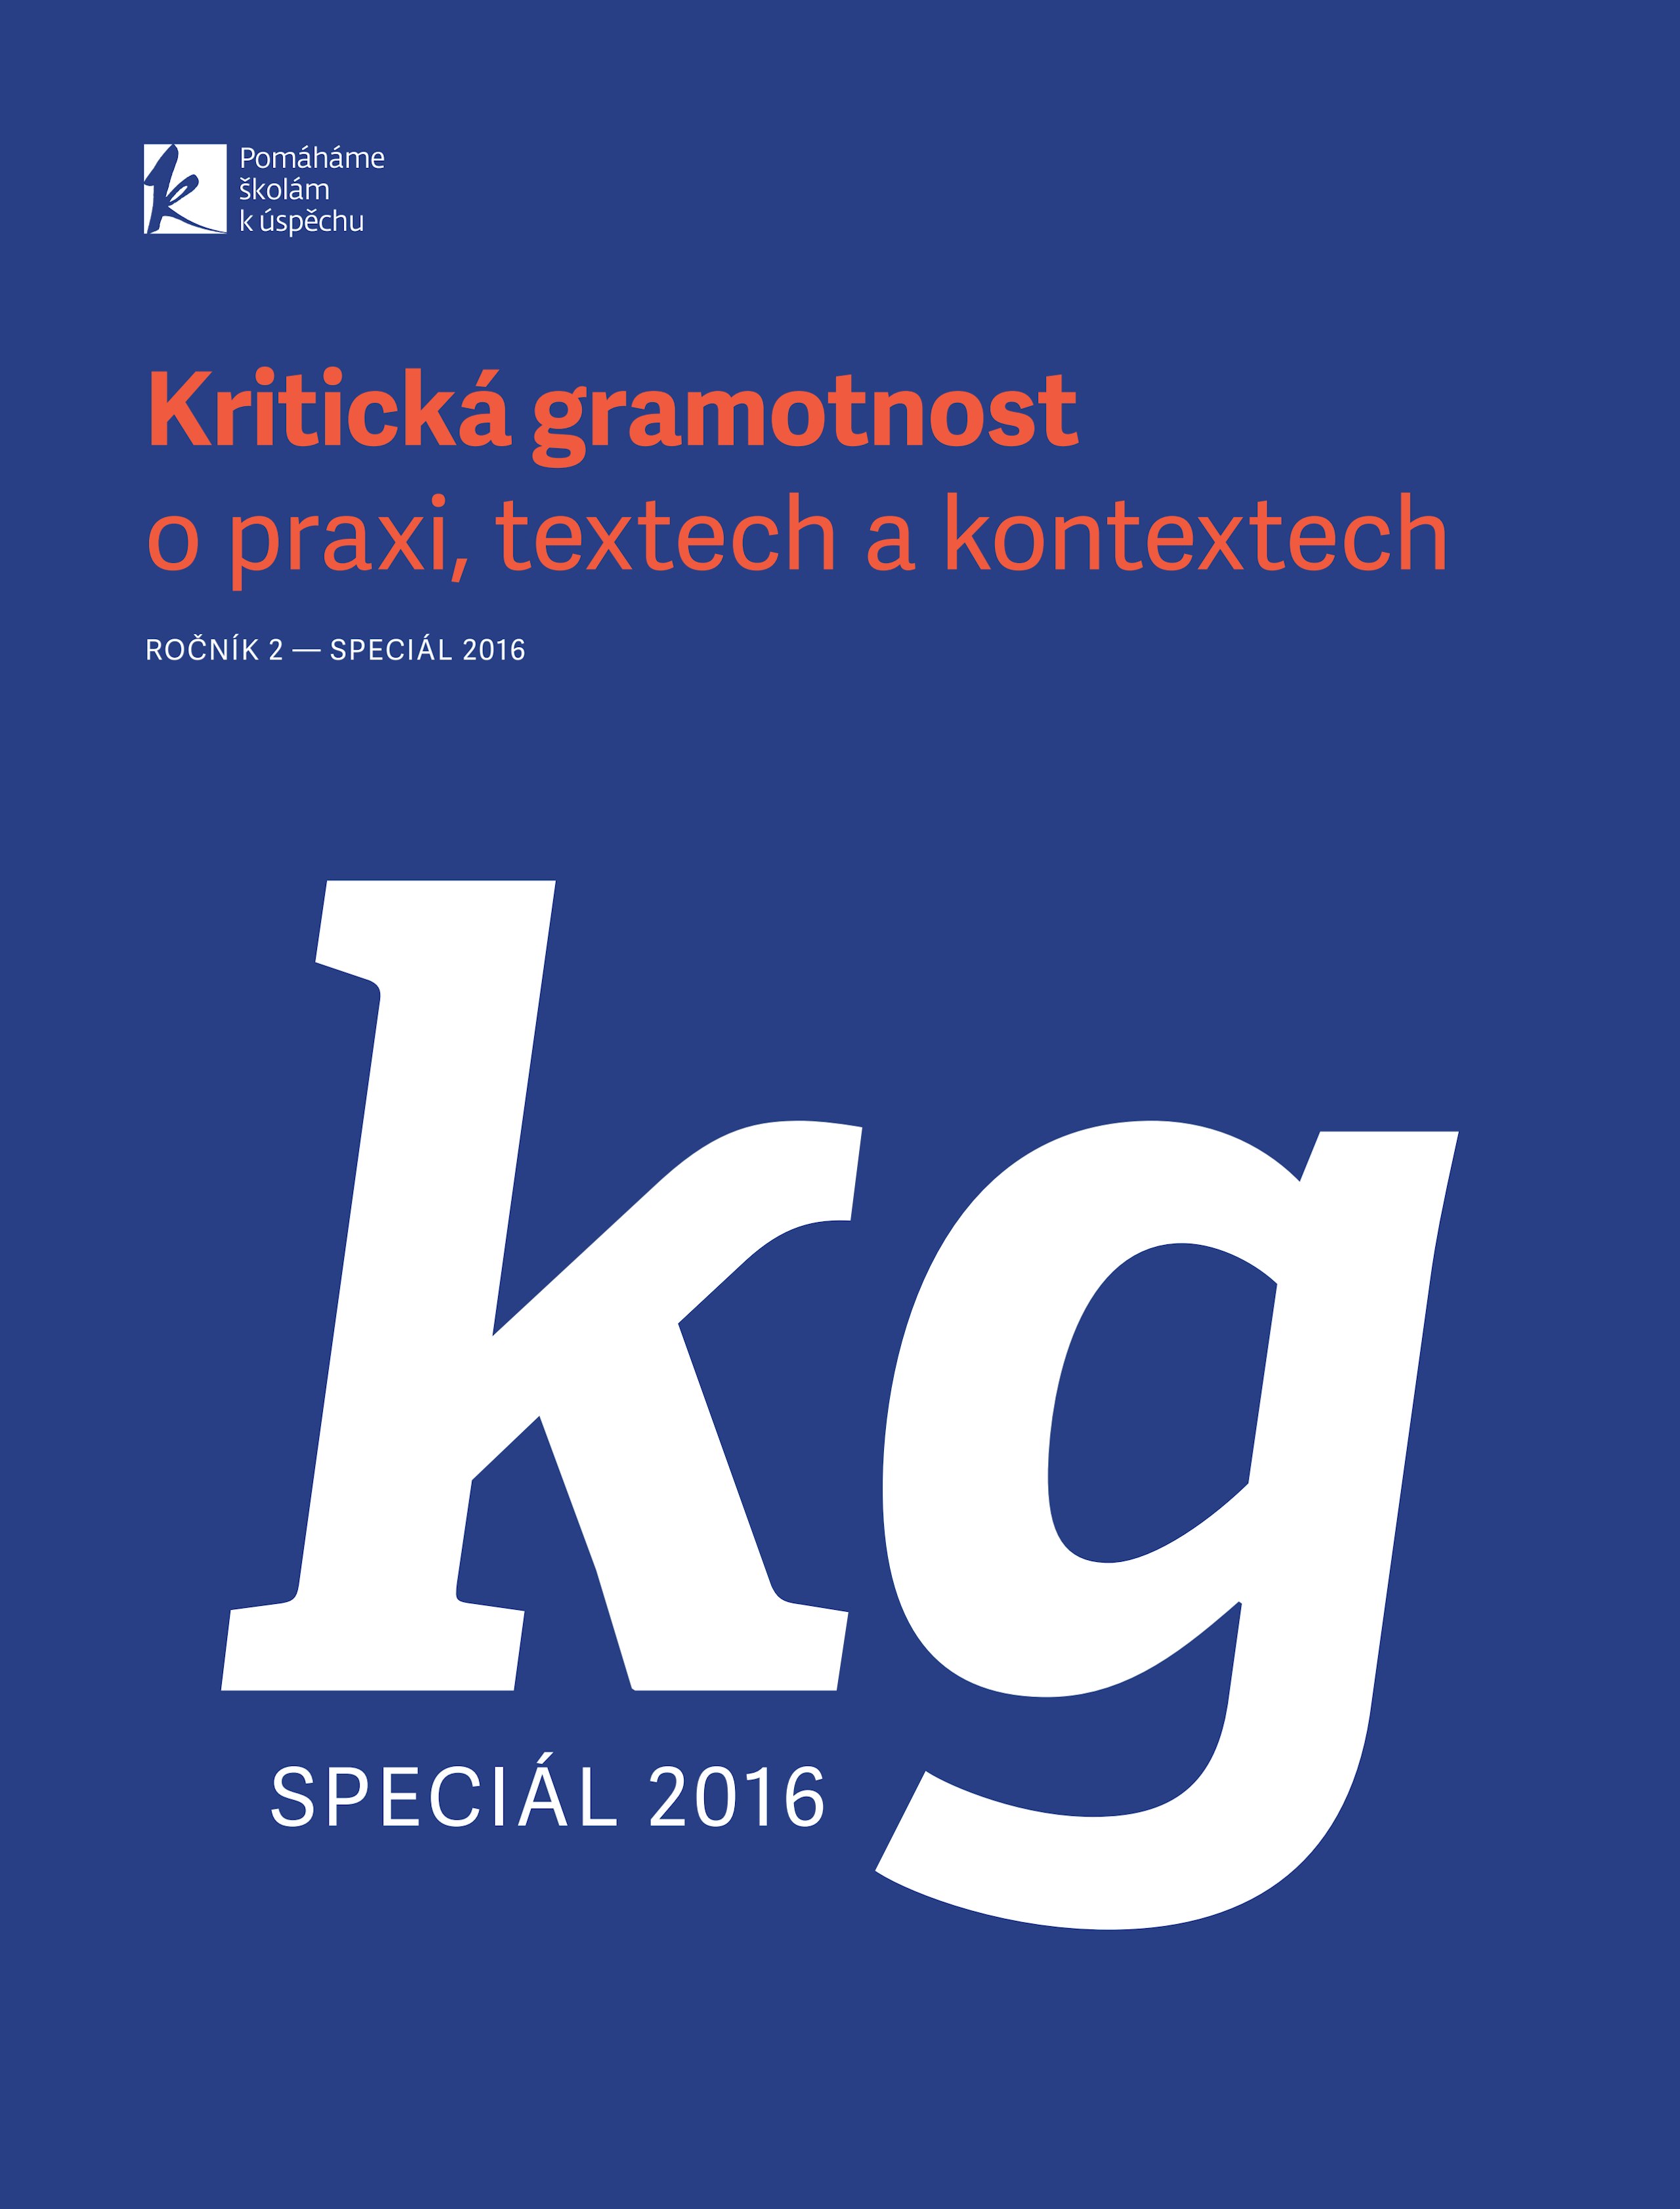 kriticka-gramotnost-special-leto-2016-e-verze.pdf